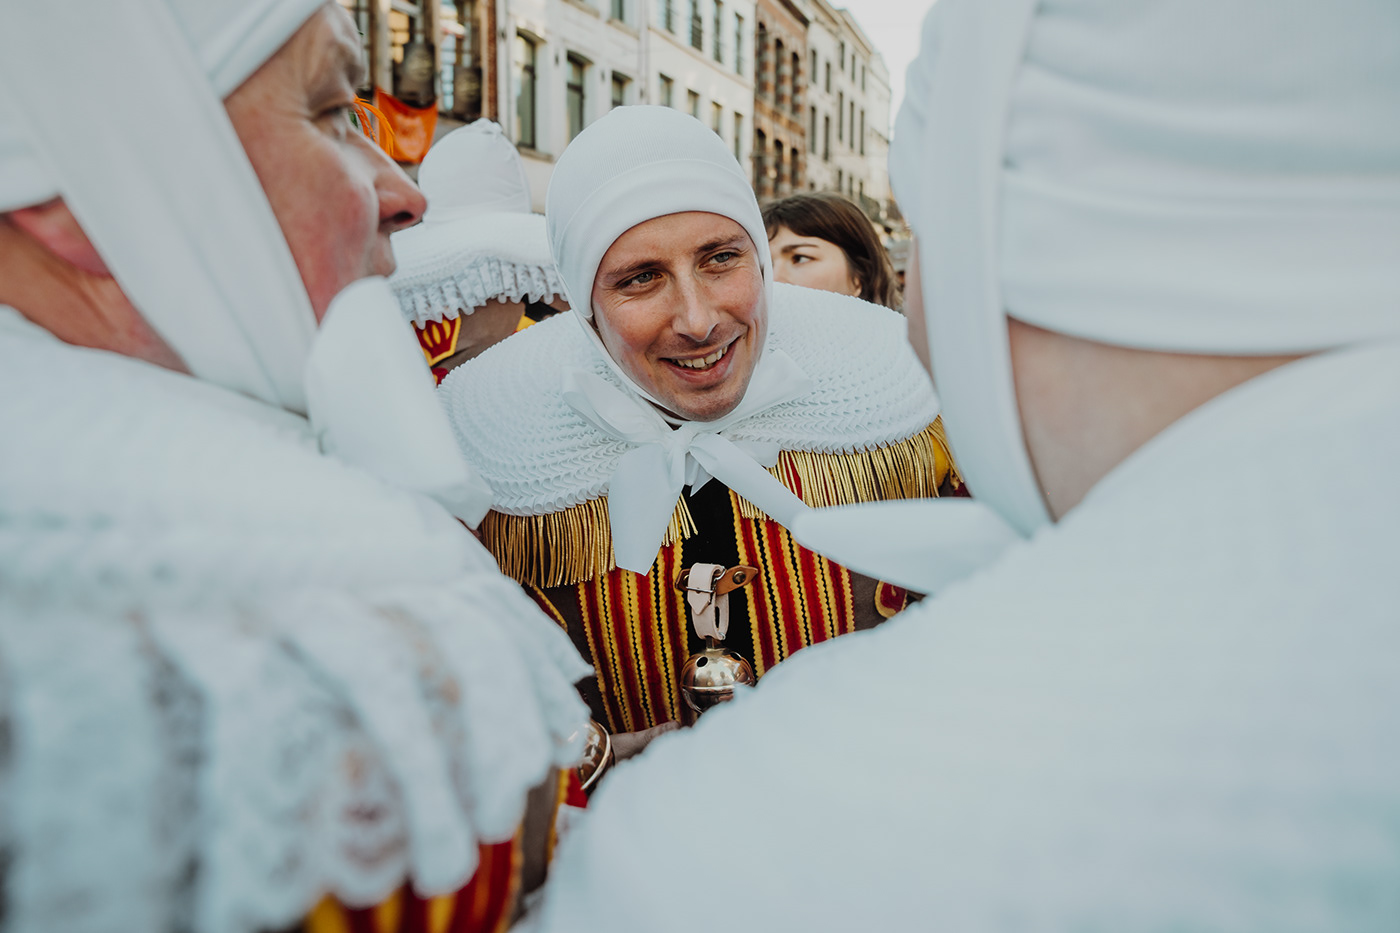 Carnaval Carnival binche Folklore belgium belgique streetphotography Travel street photographer portrait